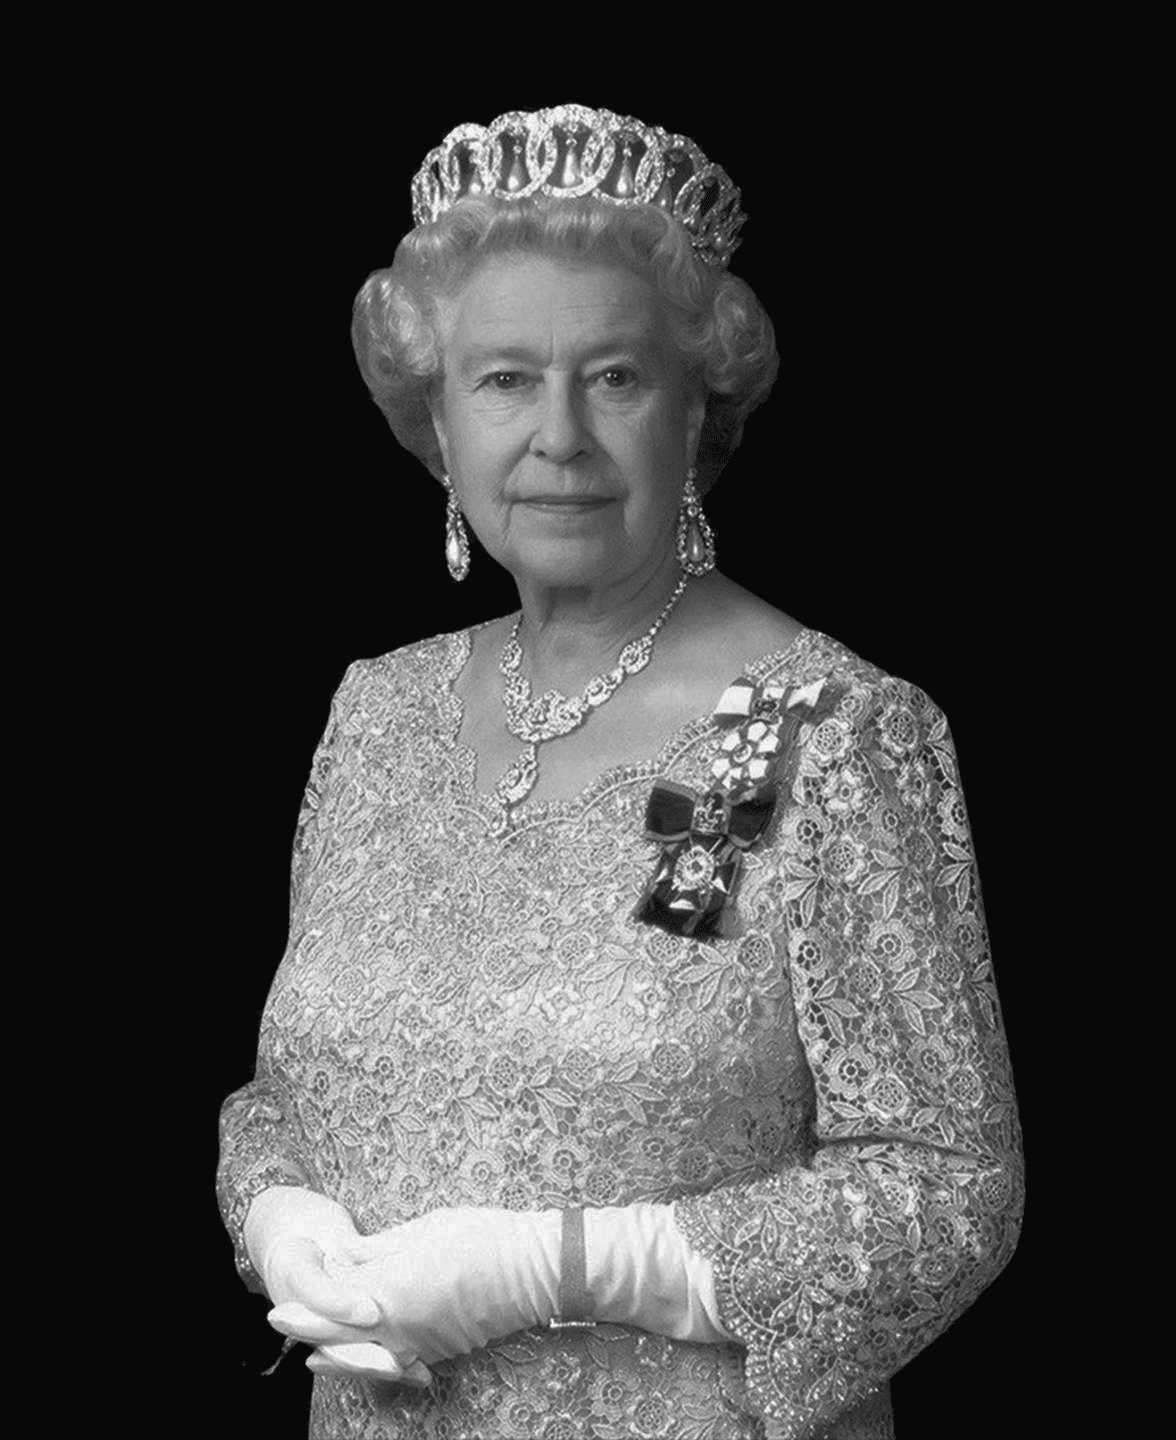 Her Late Majesty Queen Elizabeth II